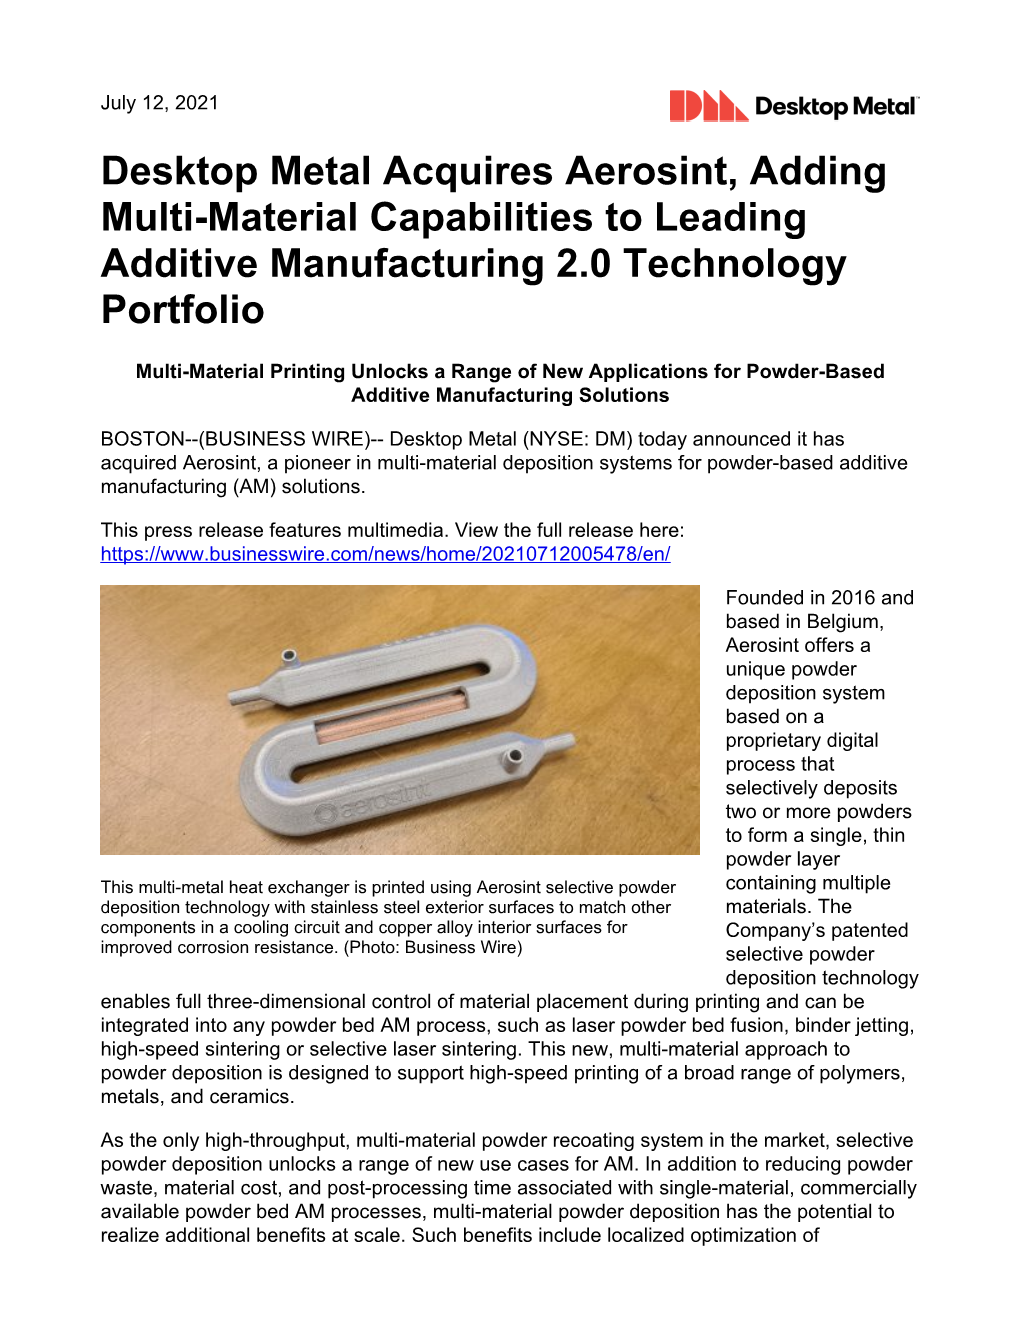 Desktop Metal Acquires Aerosint, Adding Multi-Material Capabilities to Leading Additive Manufacturing 2.0 Technology Portfolio